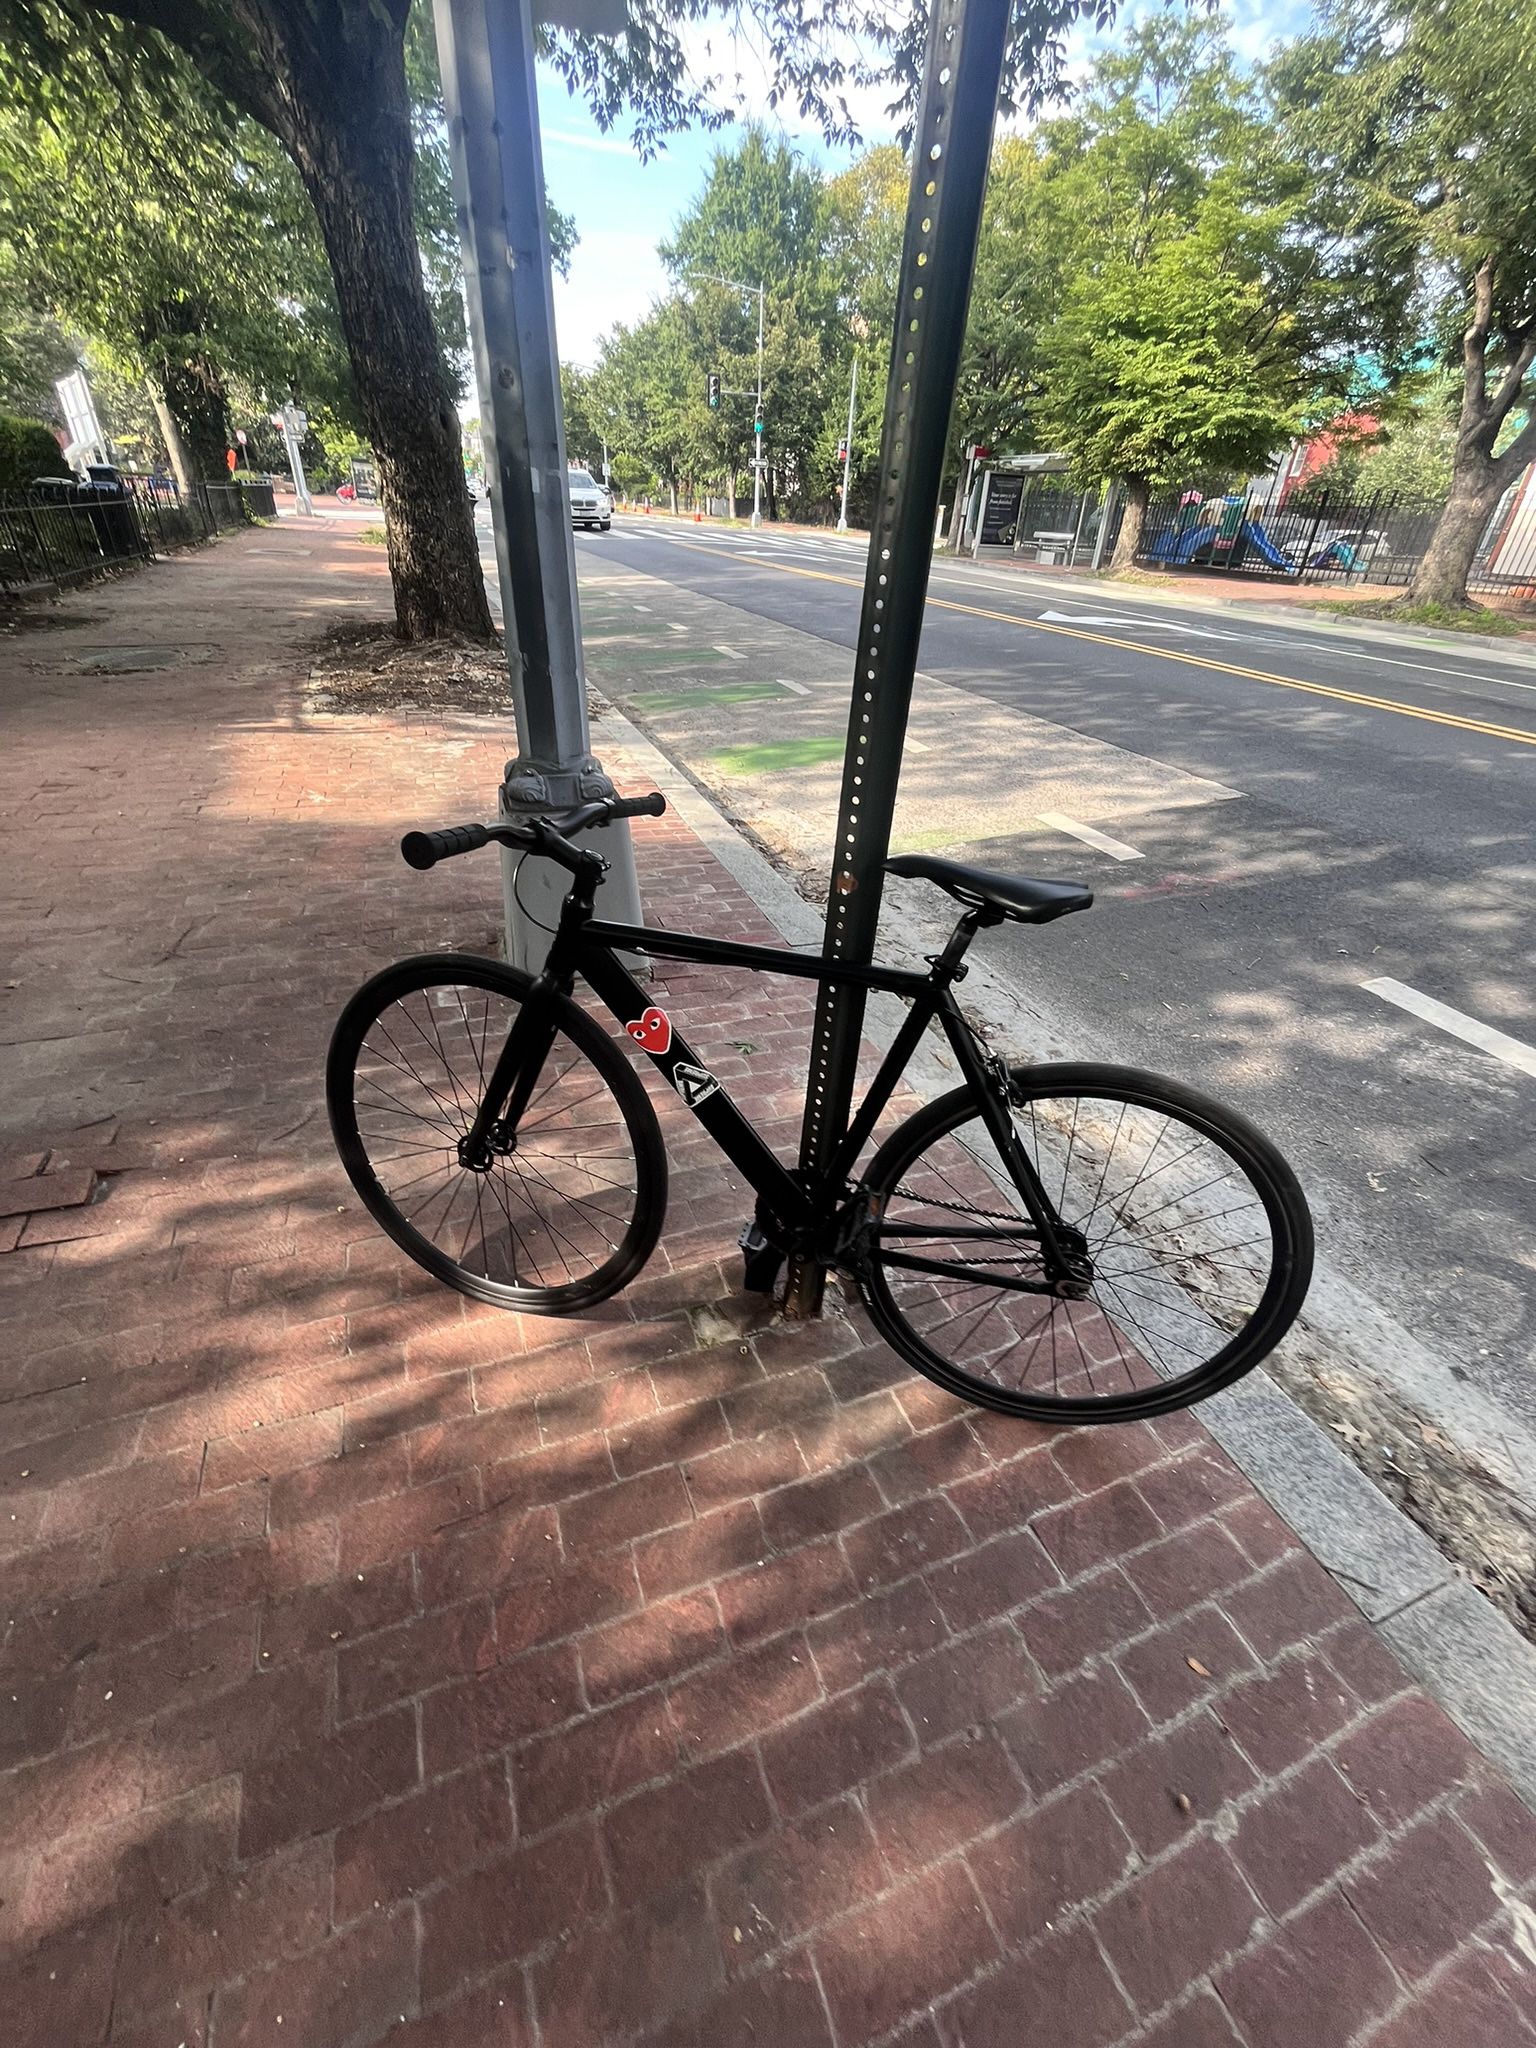 Fixed Gear Bike